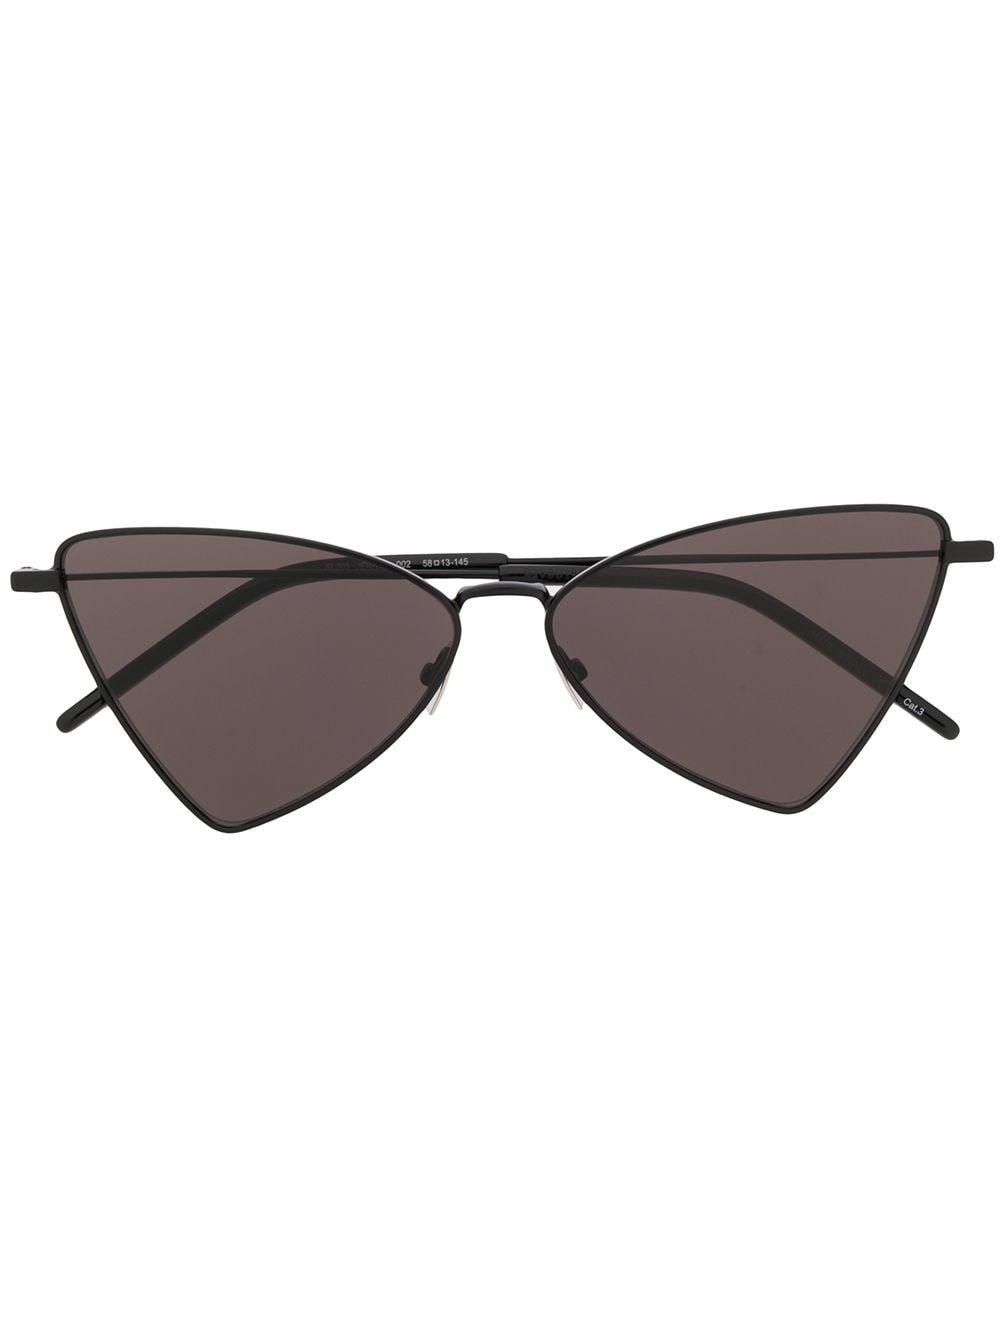 Saint Laurent Triangle Frame Sunglasses in Black | Lyst